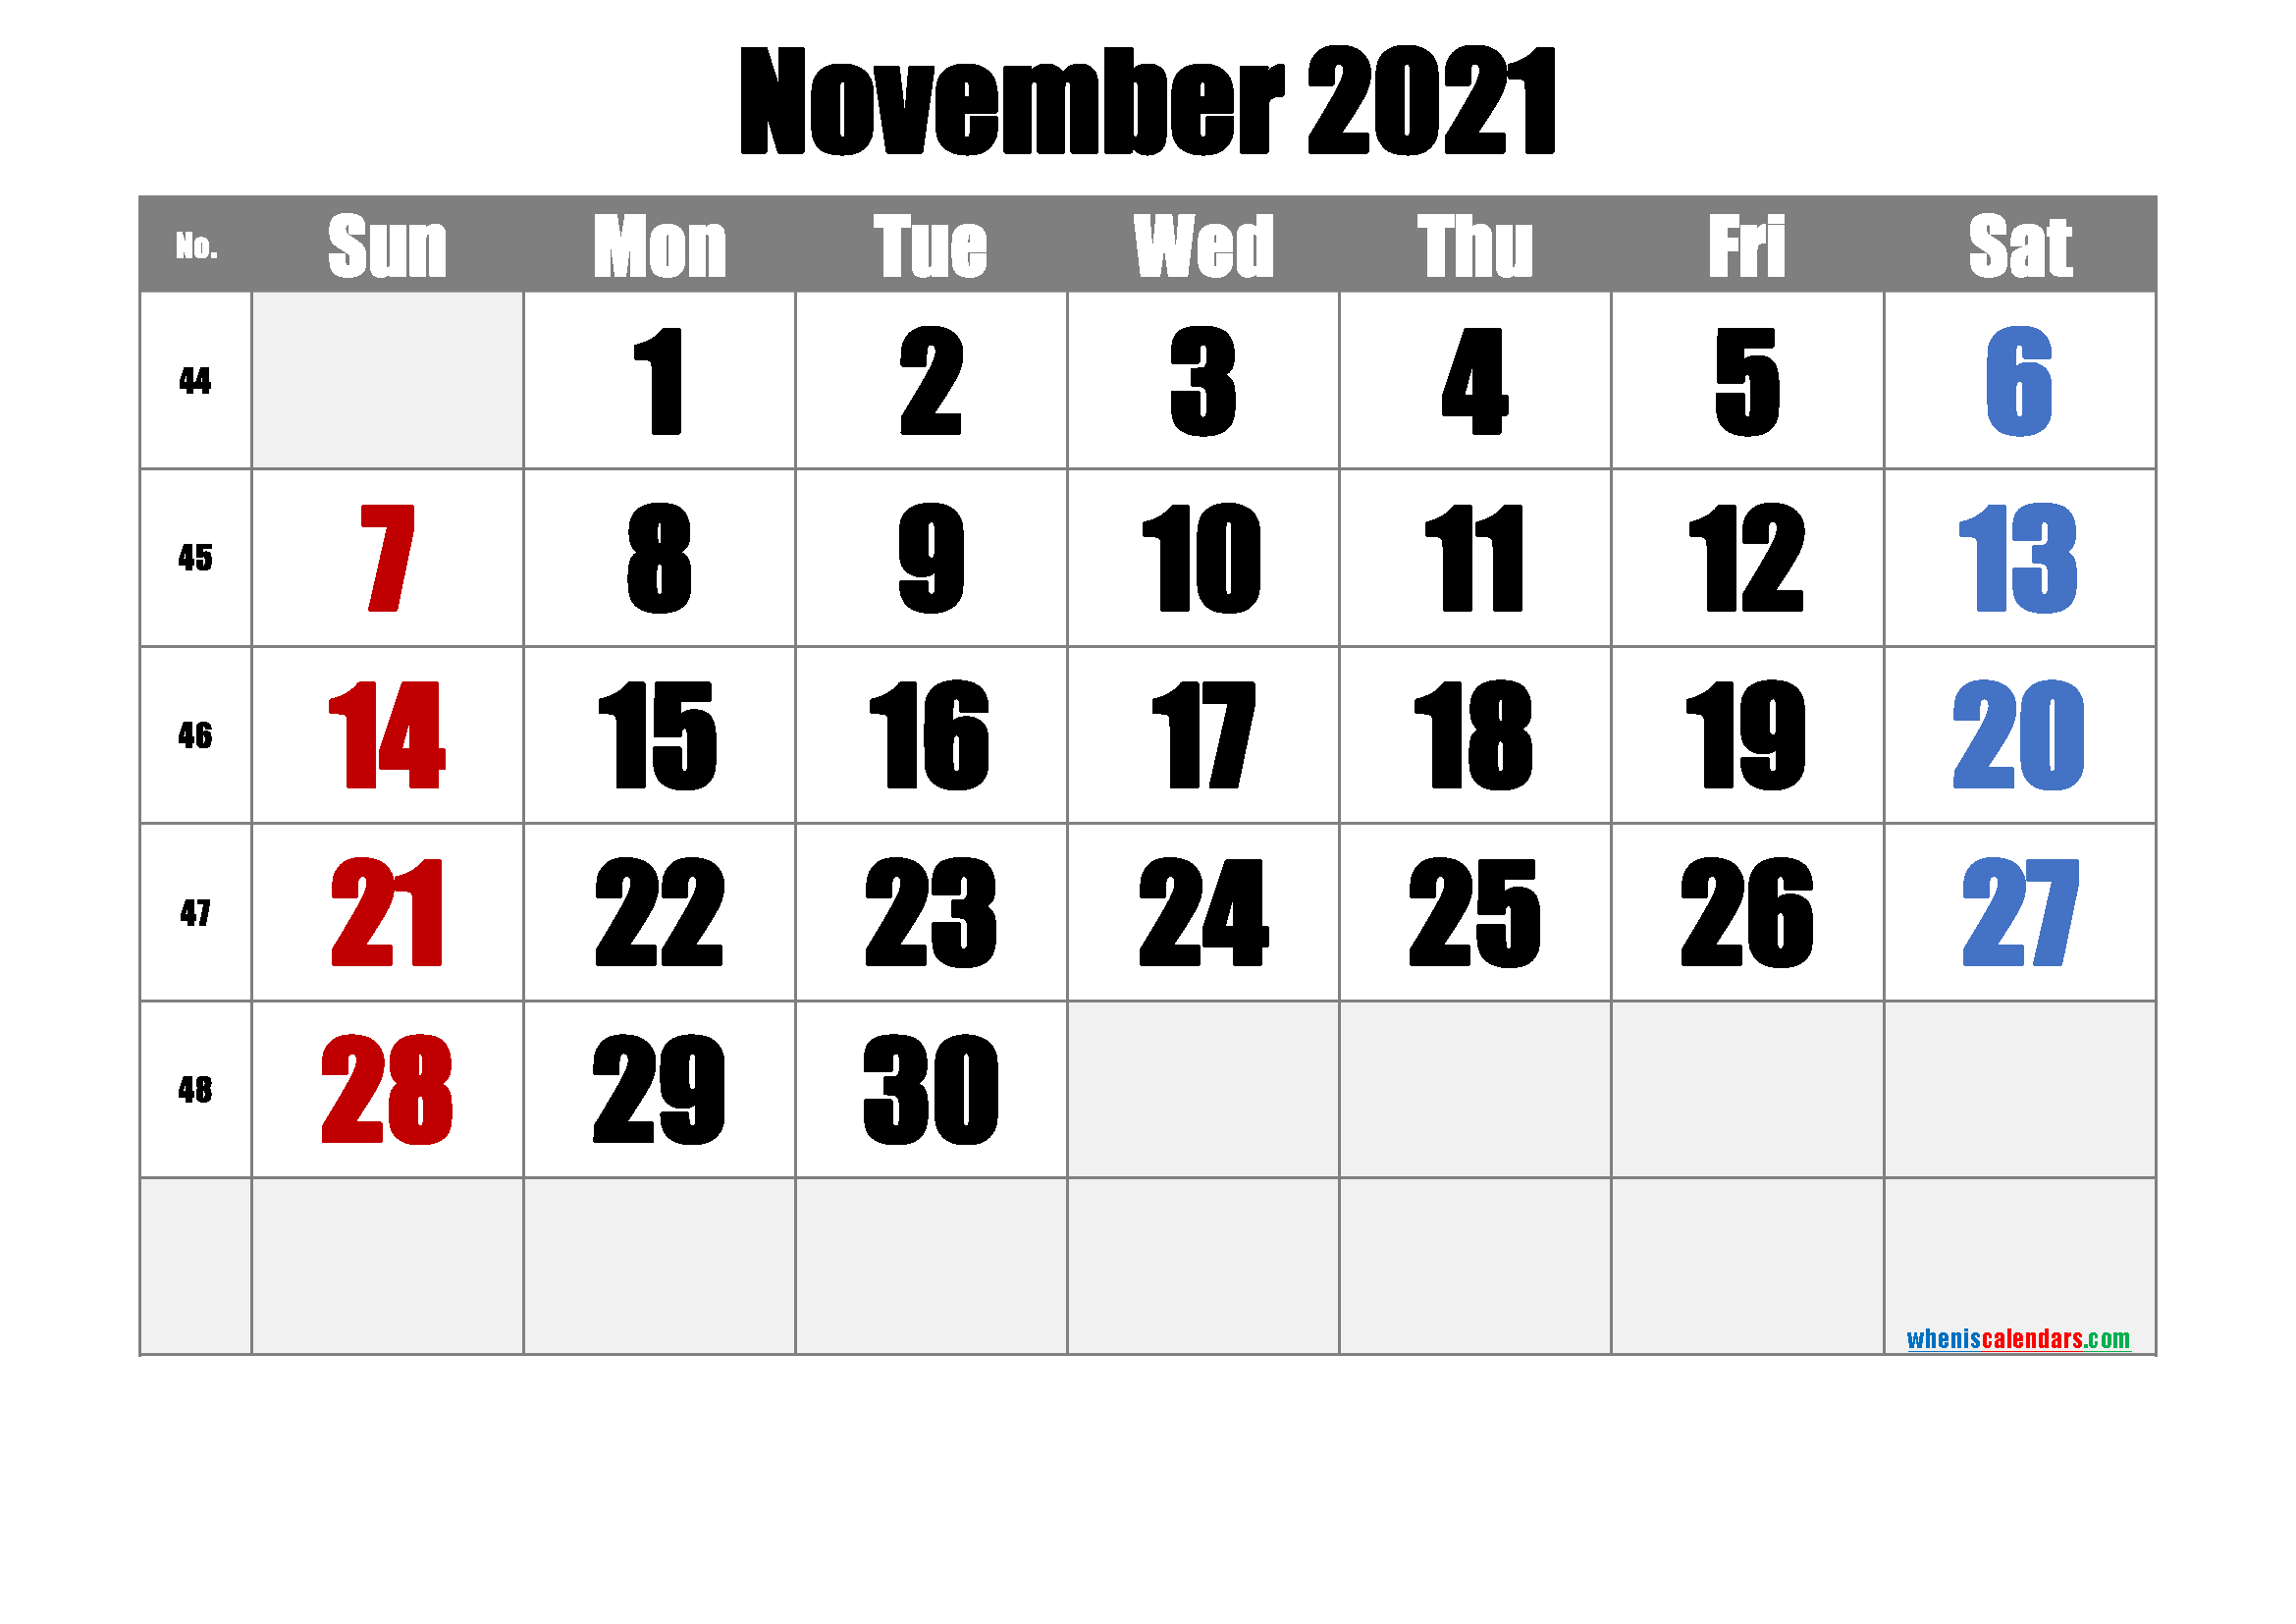 2021 November Calendar Free Printable | Example Calendar Print November 2021 Calendar